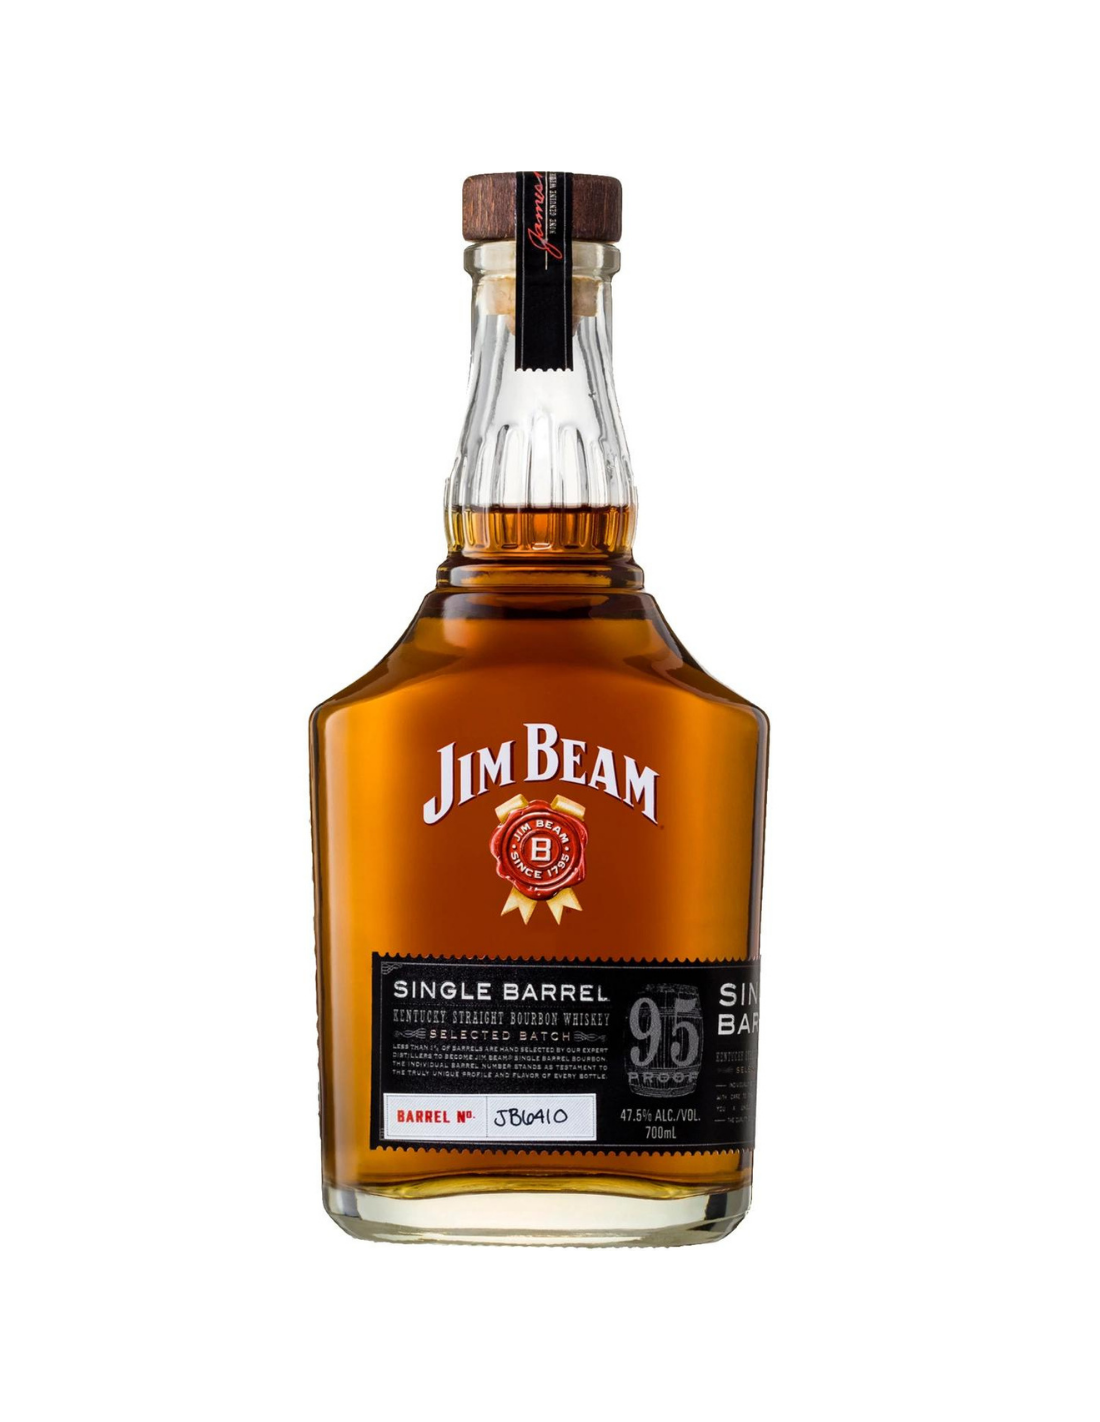 Whisky Jim Beam Single Barrel, 0.7L, 47.5% alc., SUA alcooldiscount.ro